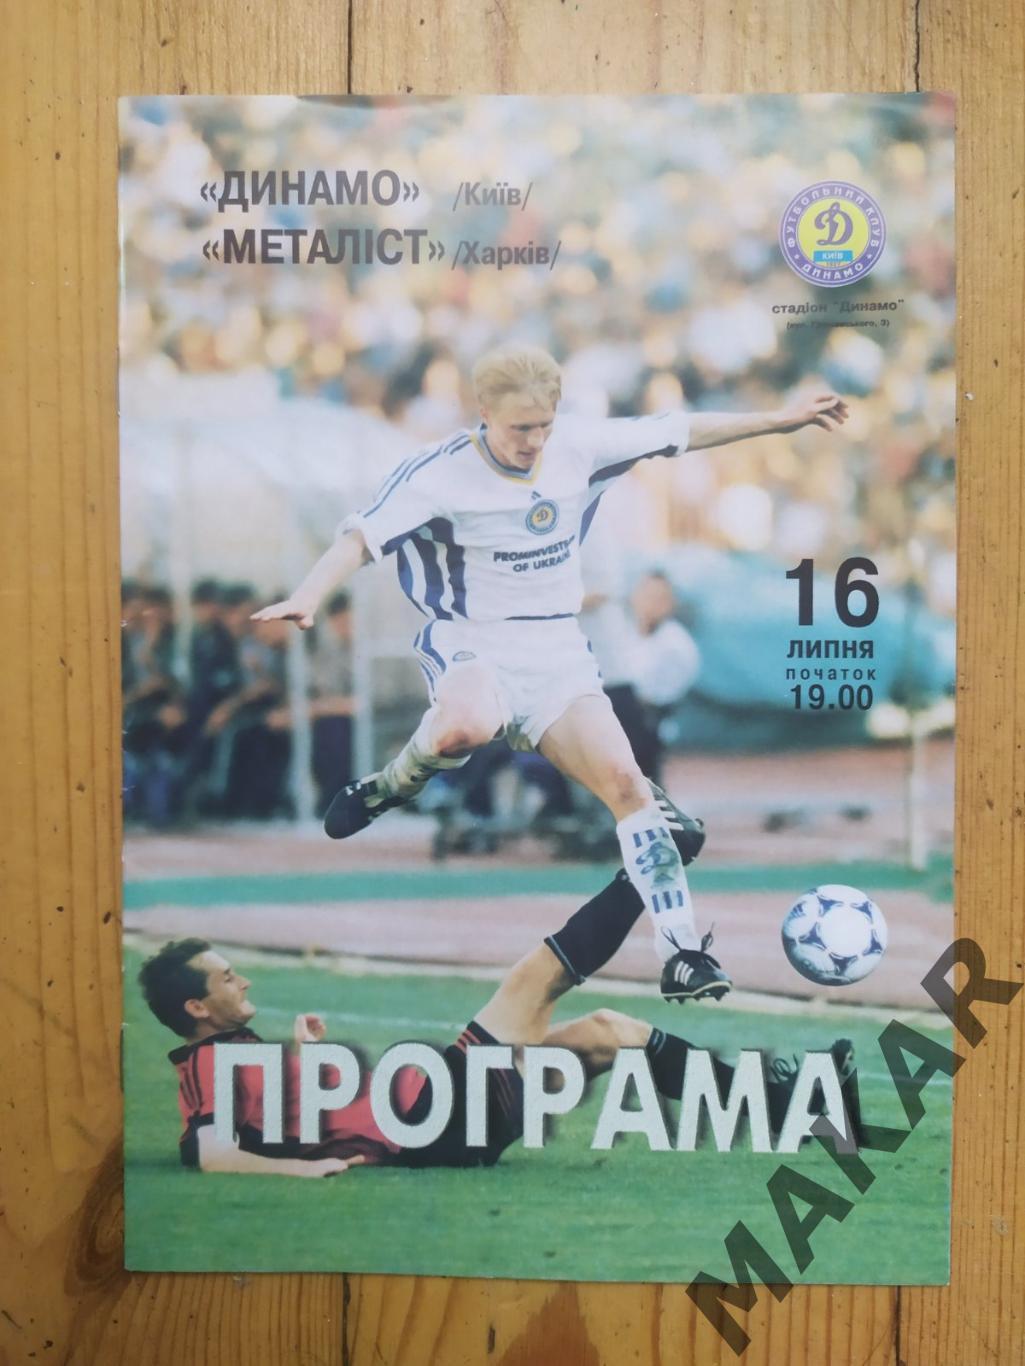 Динамо Киев Металлист Харьков 16.07.1999